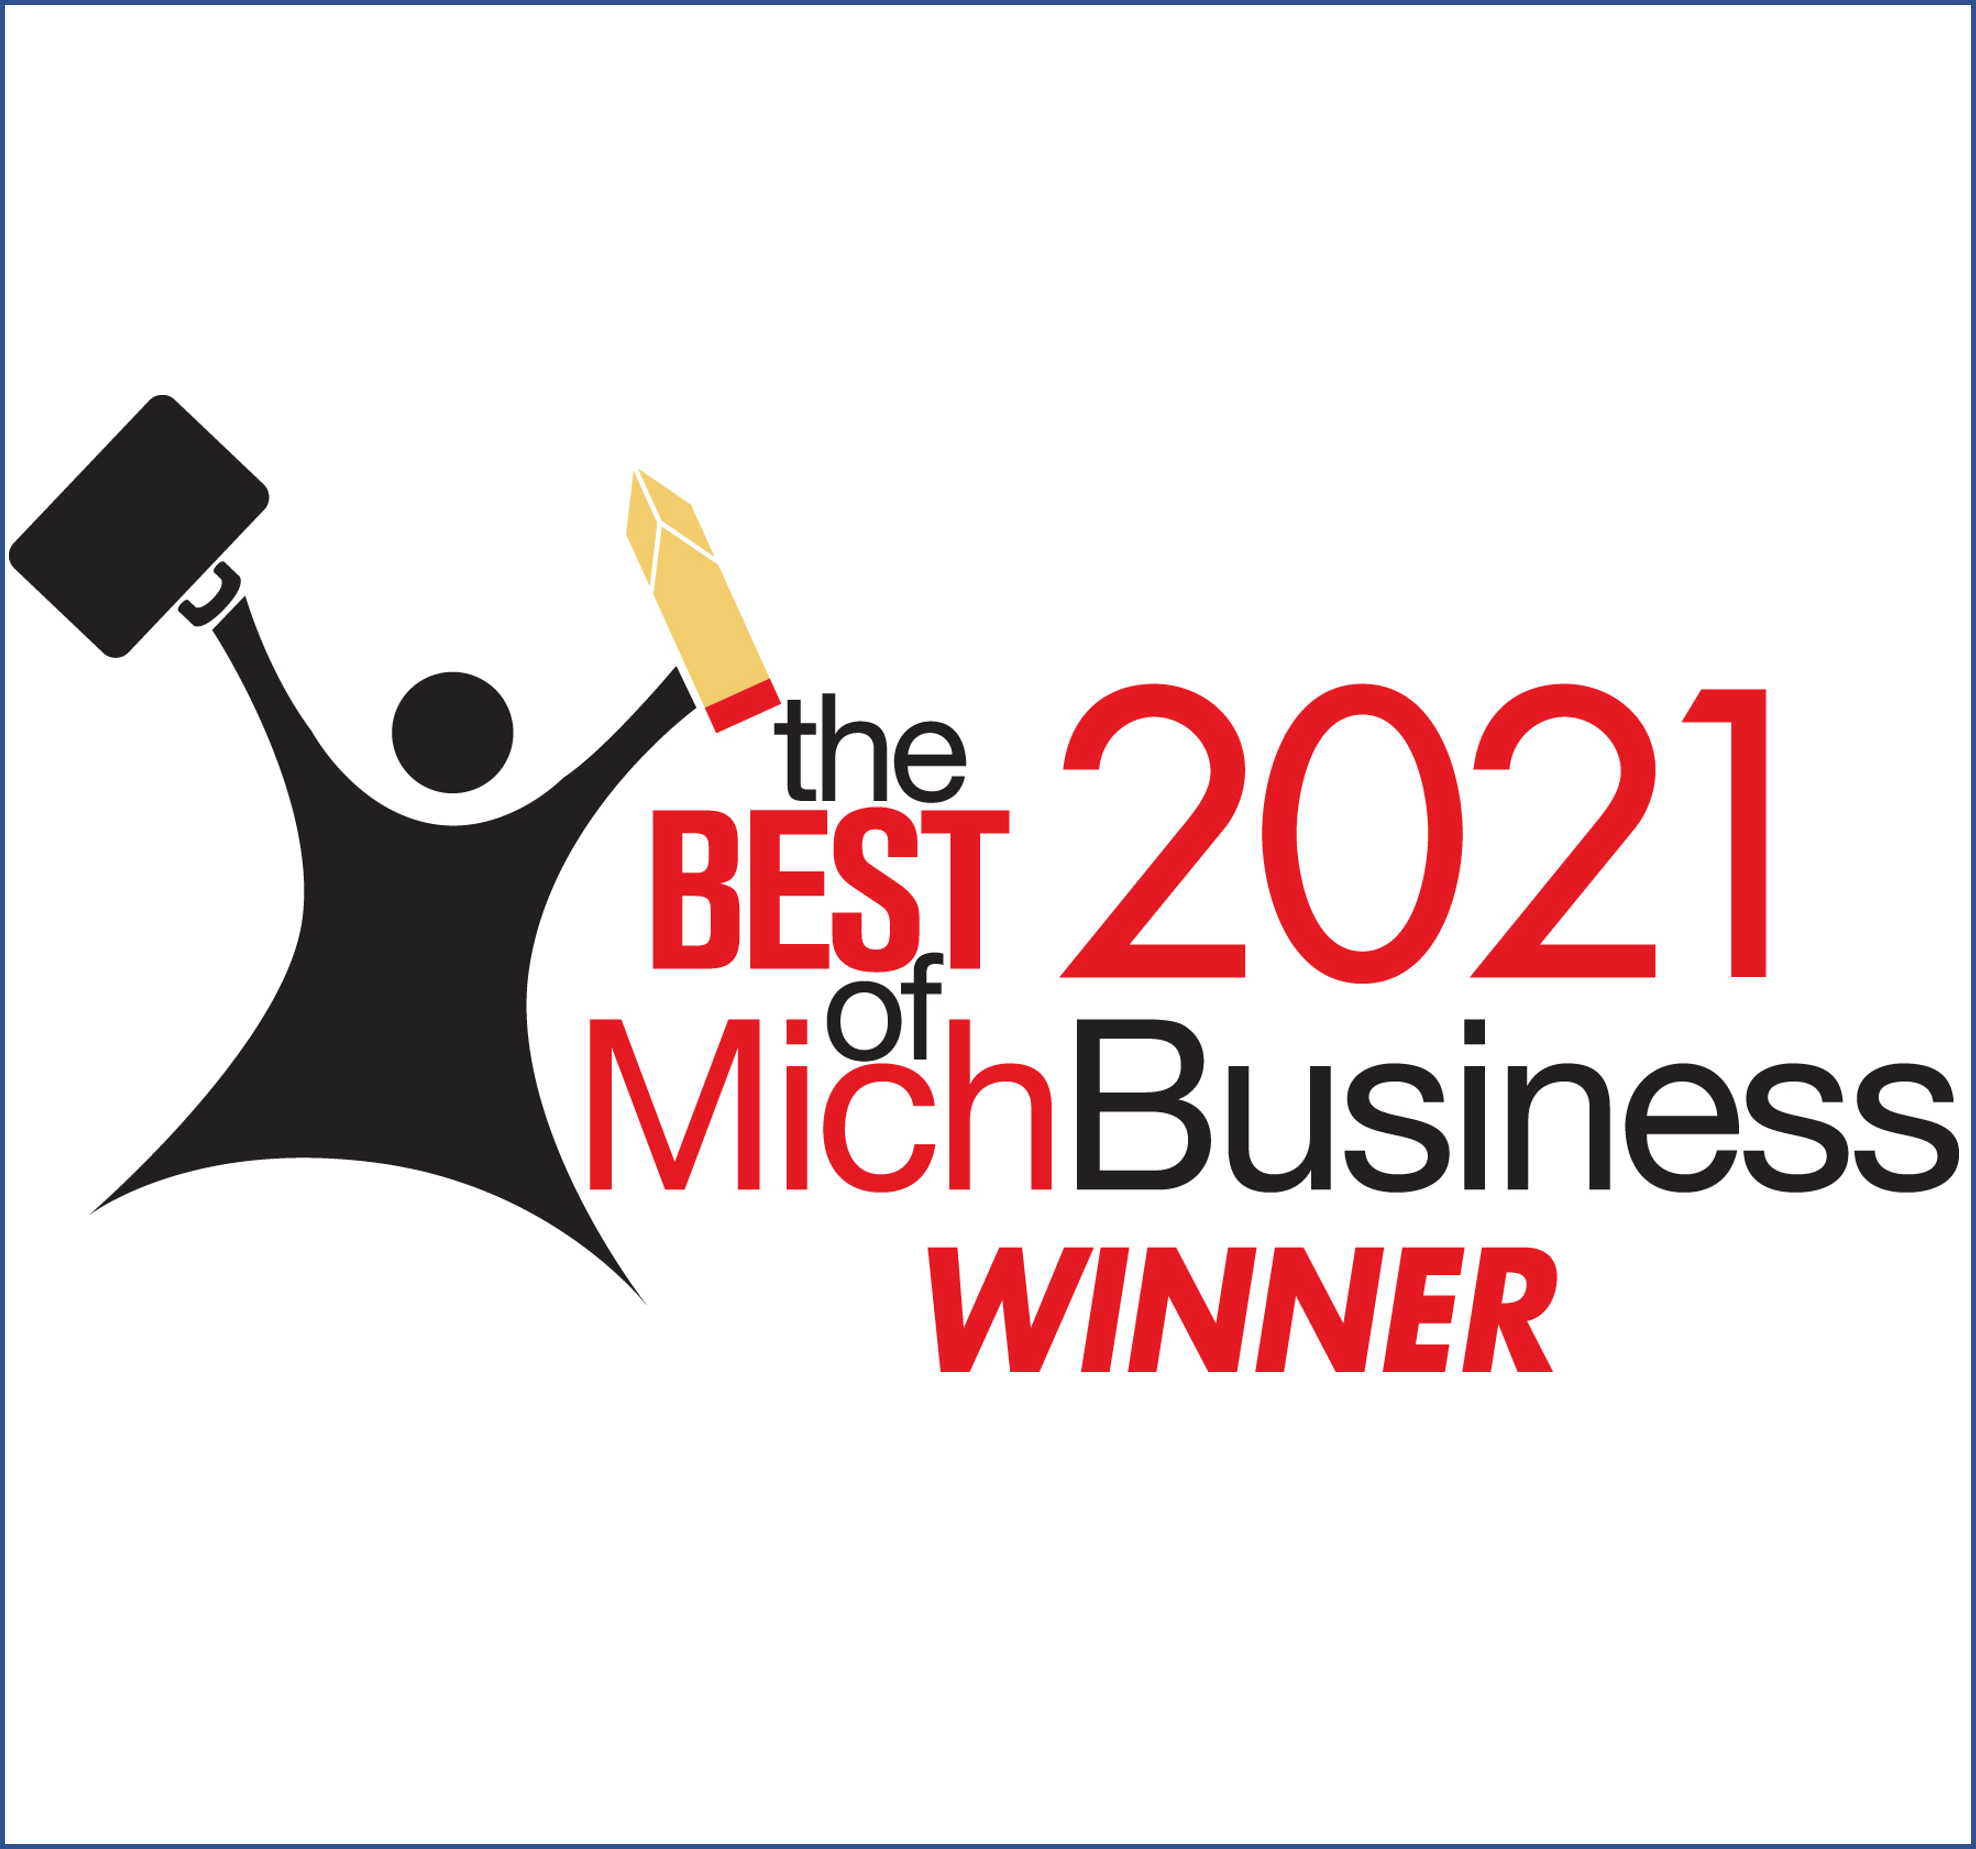 Logotipo del ganador del premio MichBusiness 2021.